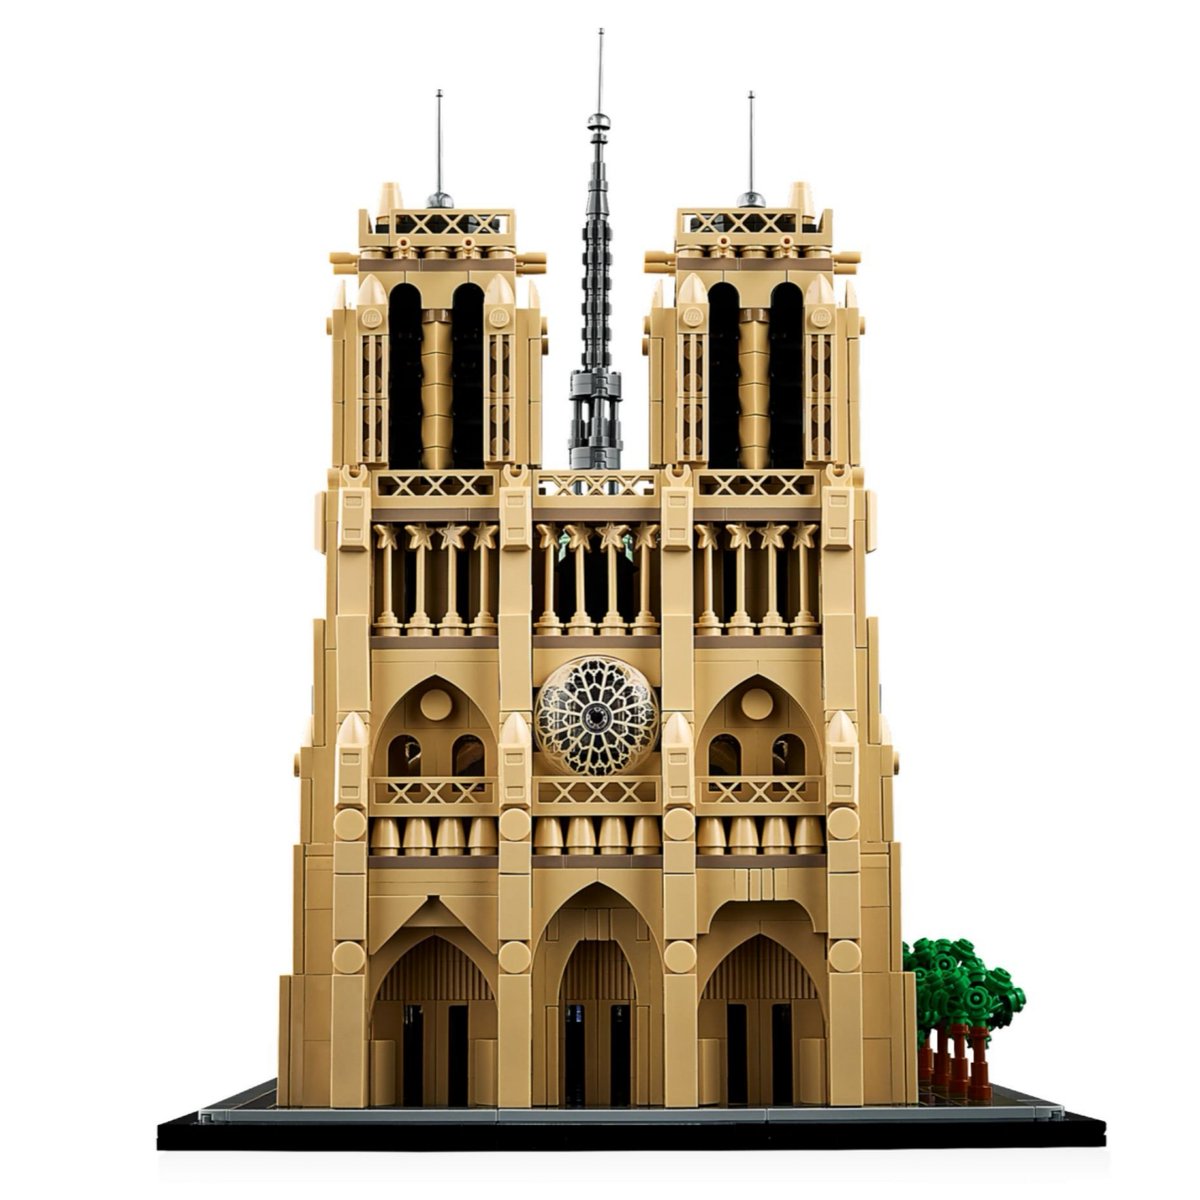 New LEGO Architecture Notre Dame revealed! Release: June 1st Price: $229.99 Pieces: 4383 #legonews #legoleaks #lego #NotreDame #Paris